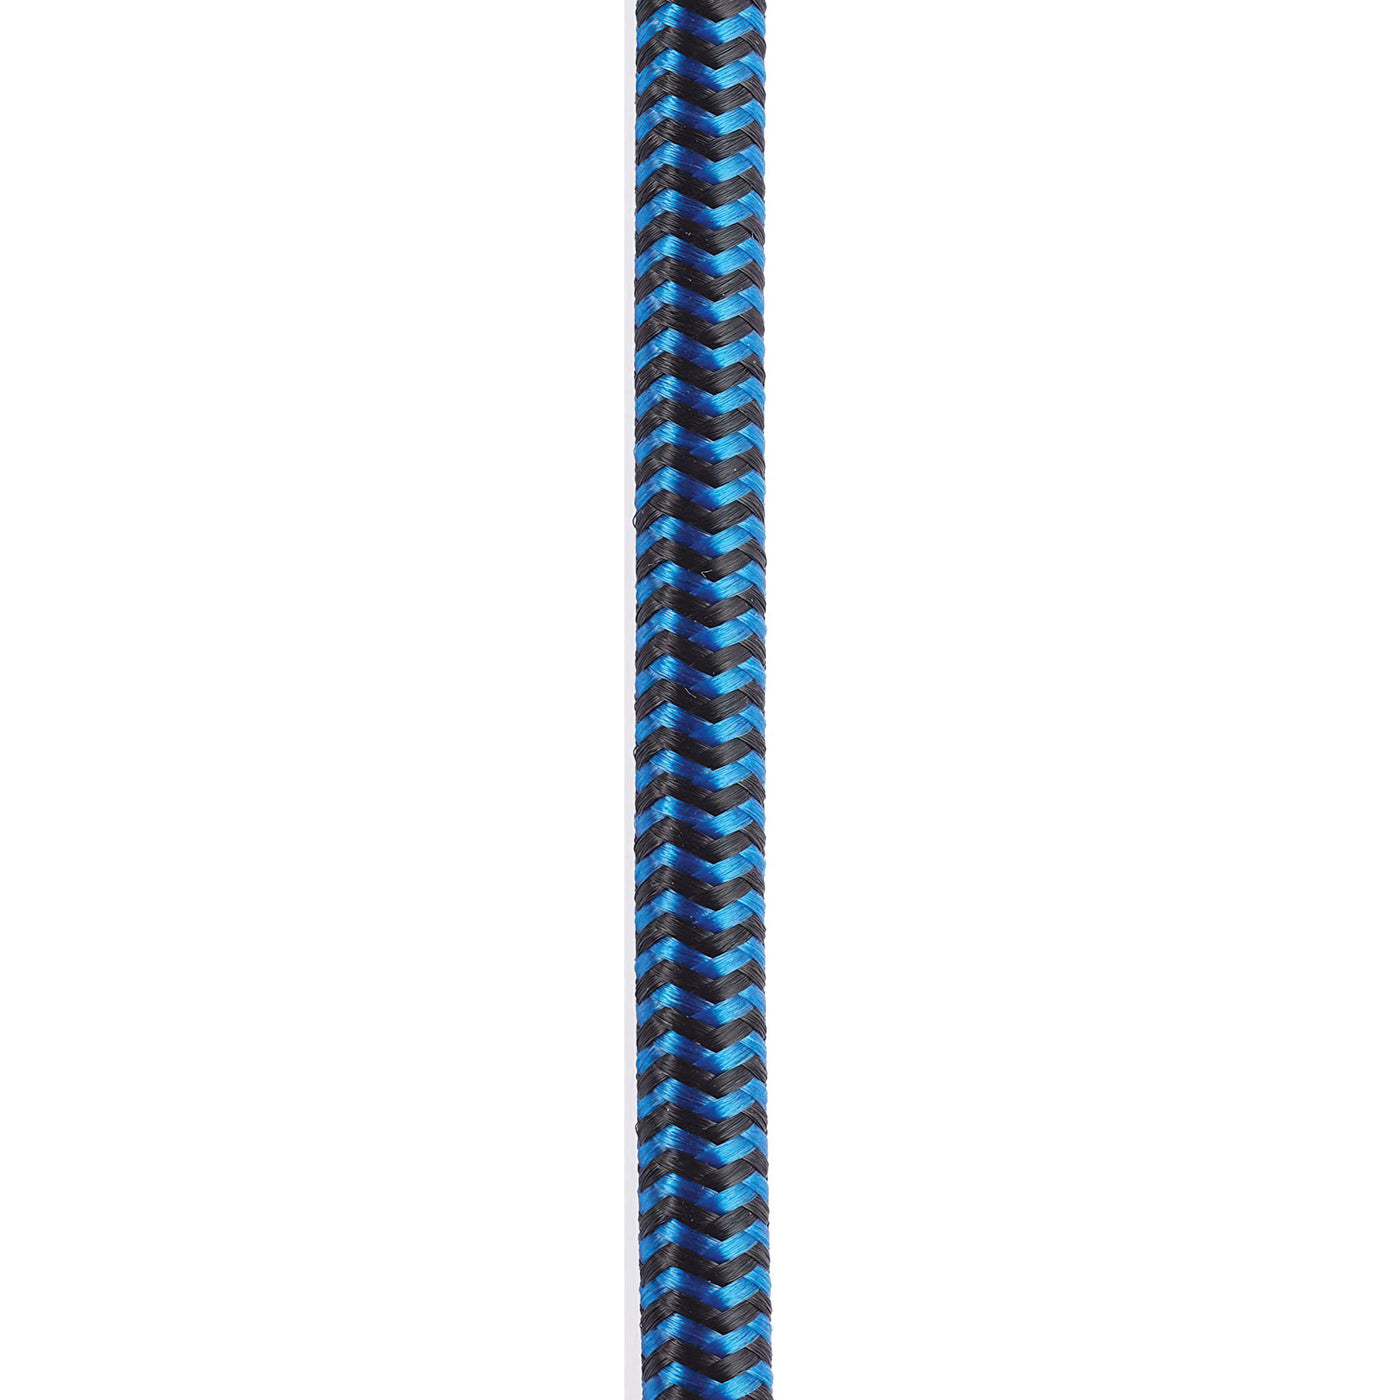 D'Addario Custom Series Braided Instrument Cable, Blue, 20' (PW-BG-20BU)